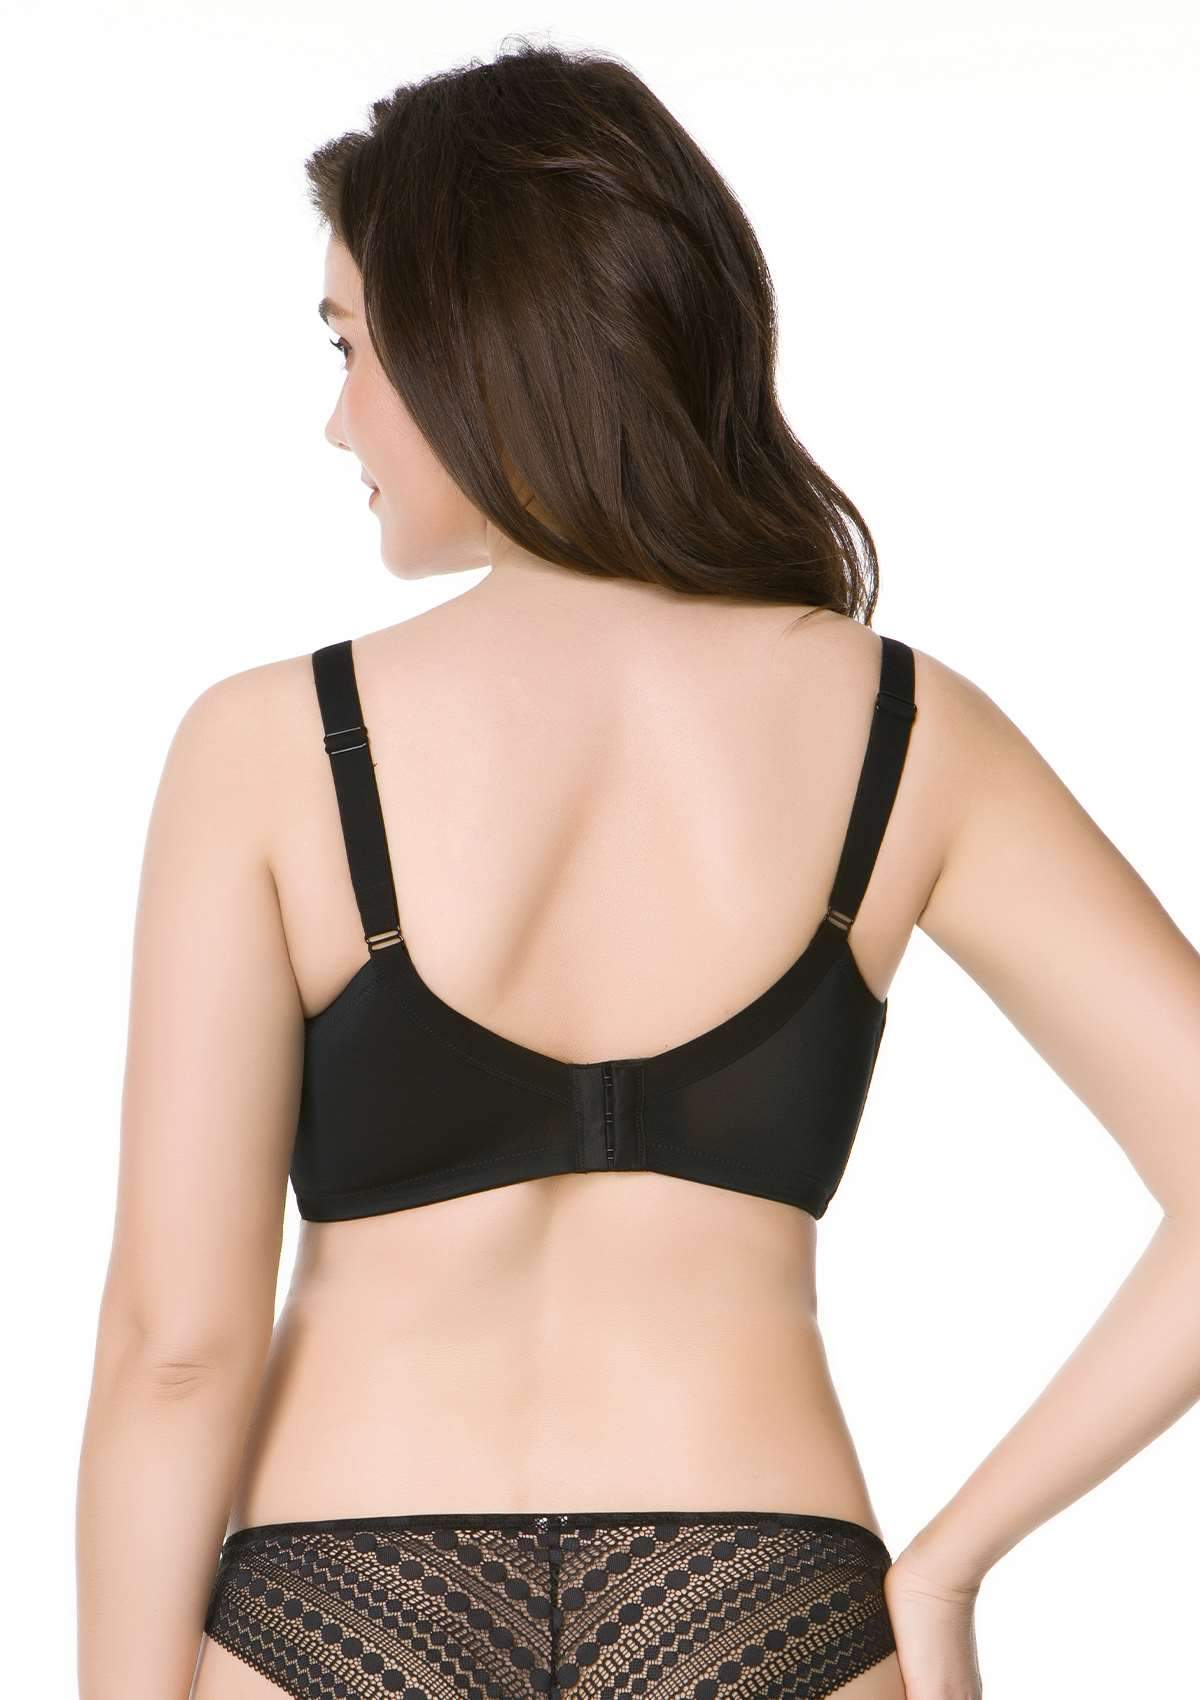 HSIA Heroine Matching Bra And Panties: Unlined Lace Unpadded Bra - Black / 38 / DDD/F